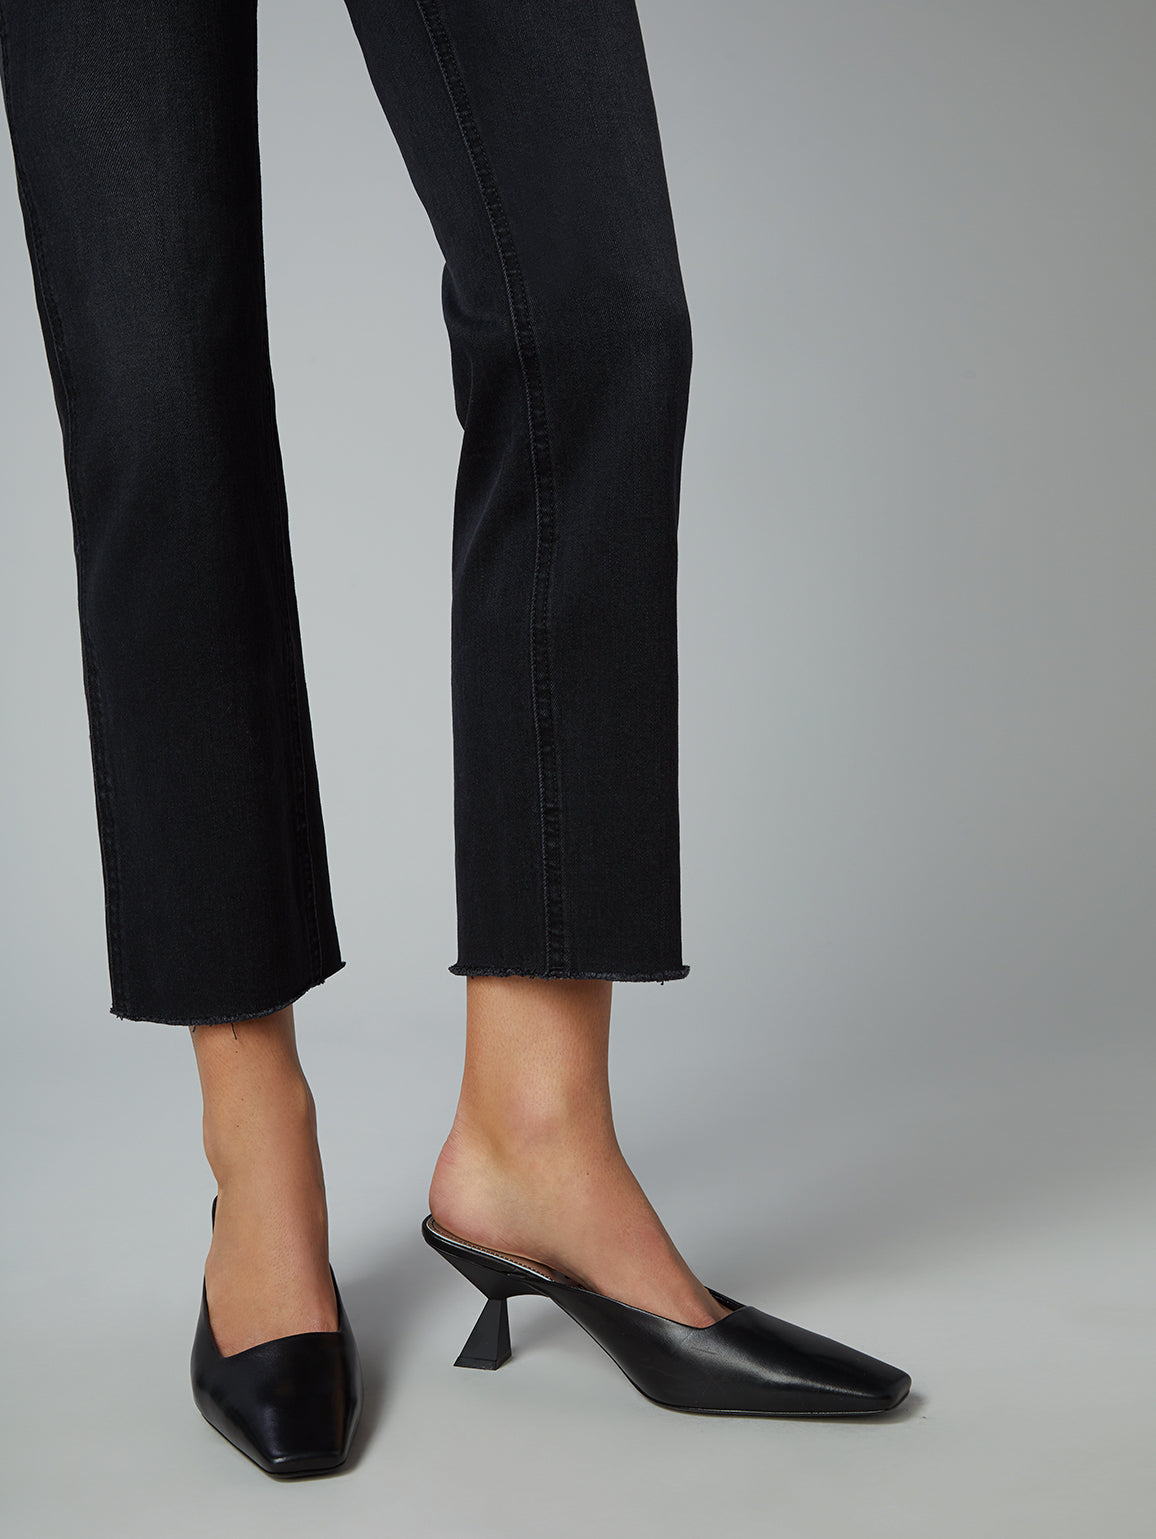 raw hem on the high rise straight leg vintage inspired black jeans